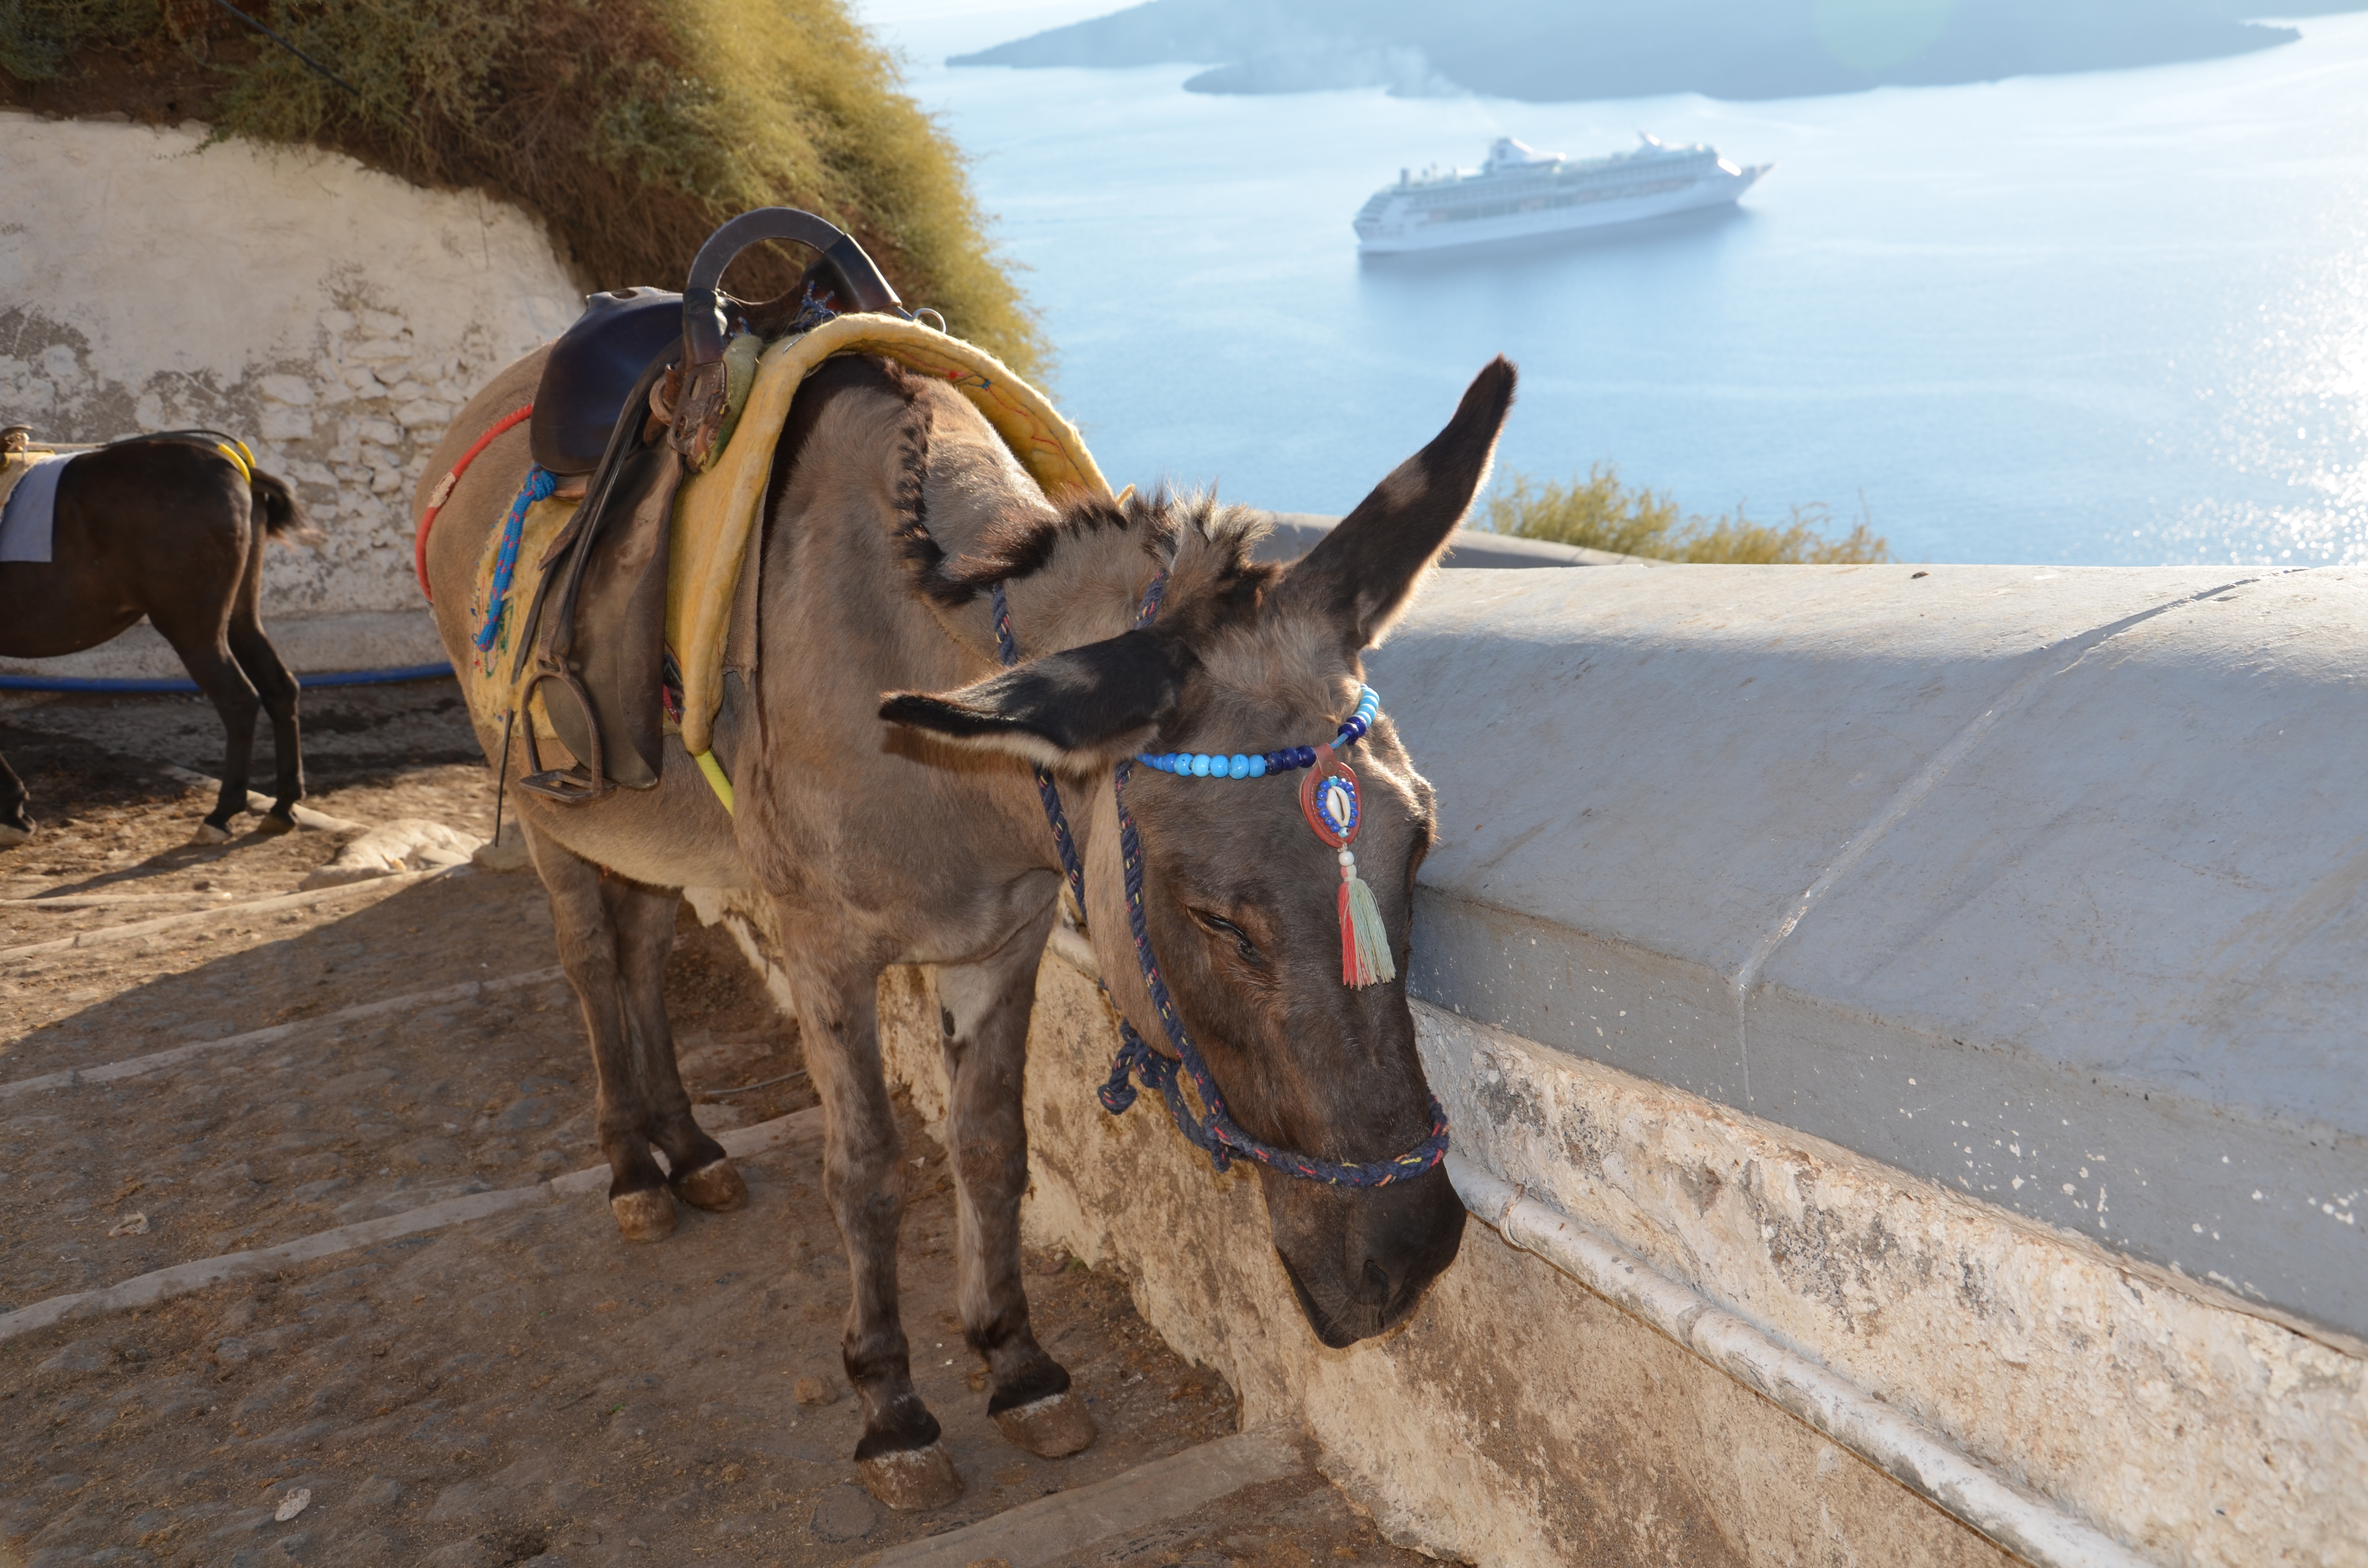 Santorini donkey